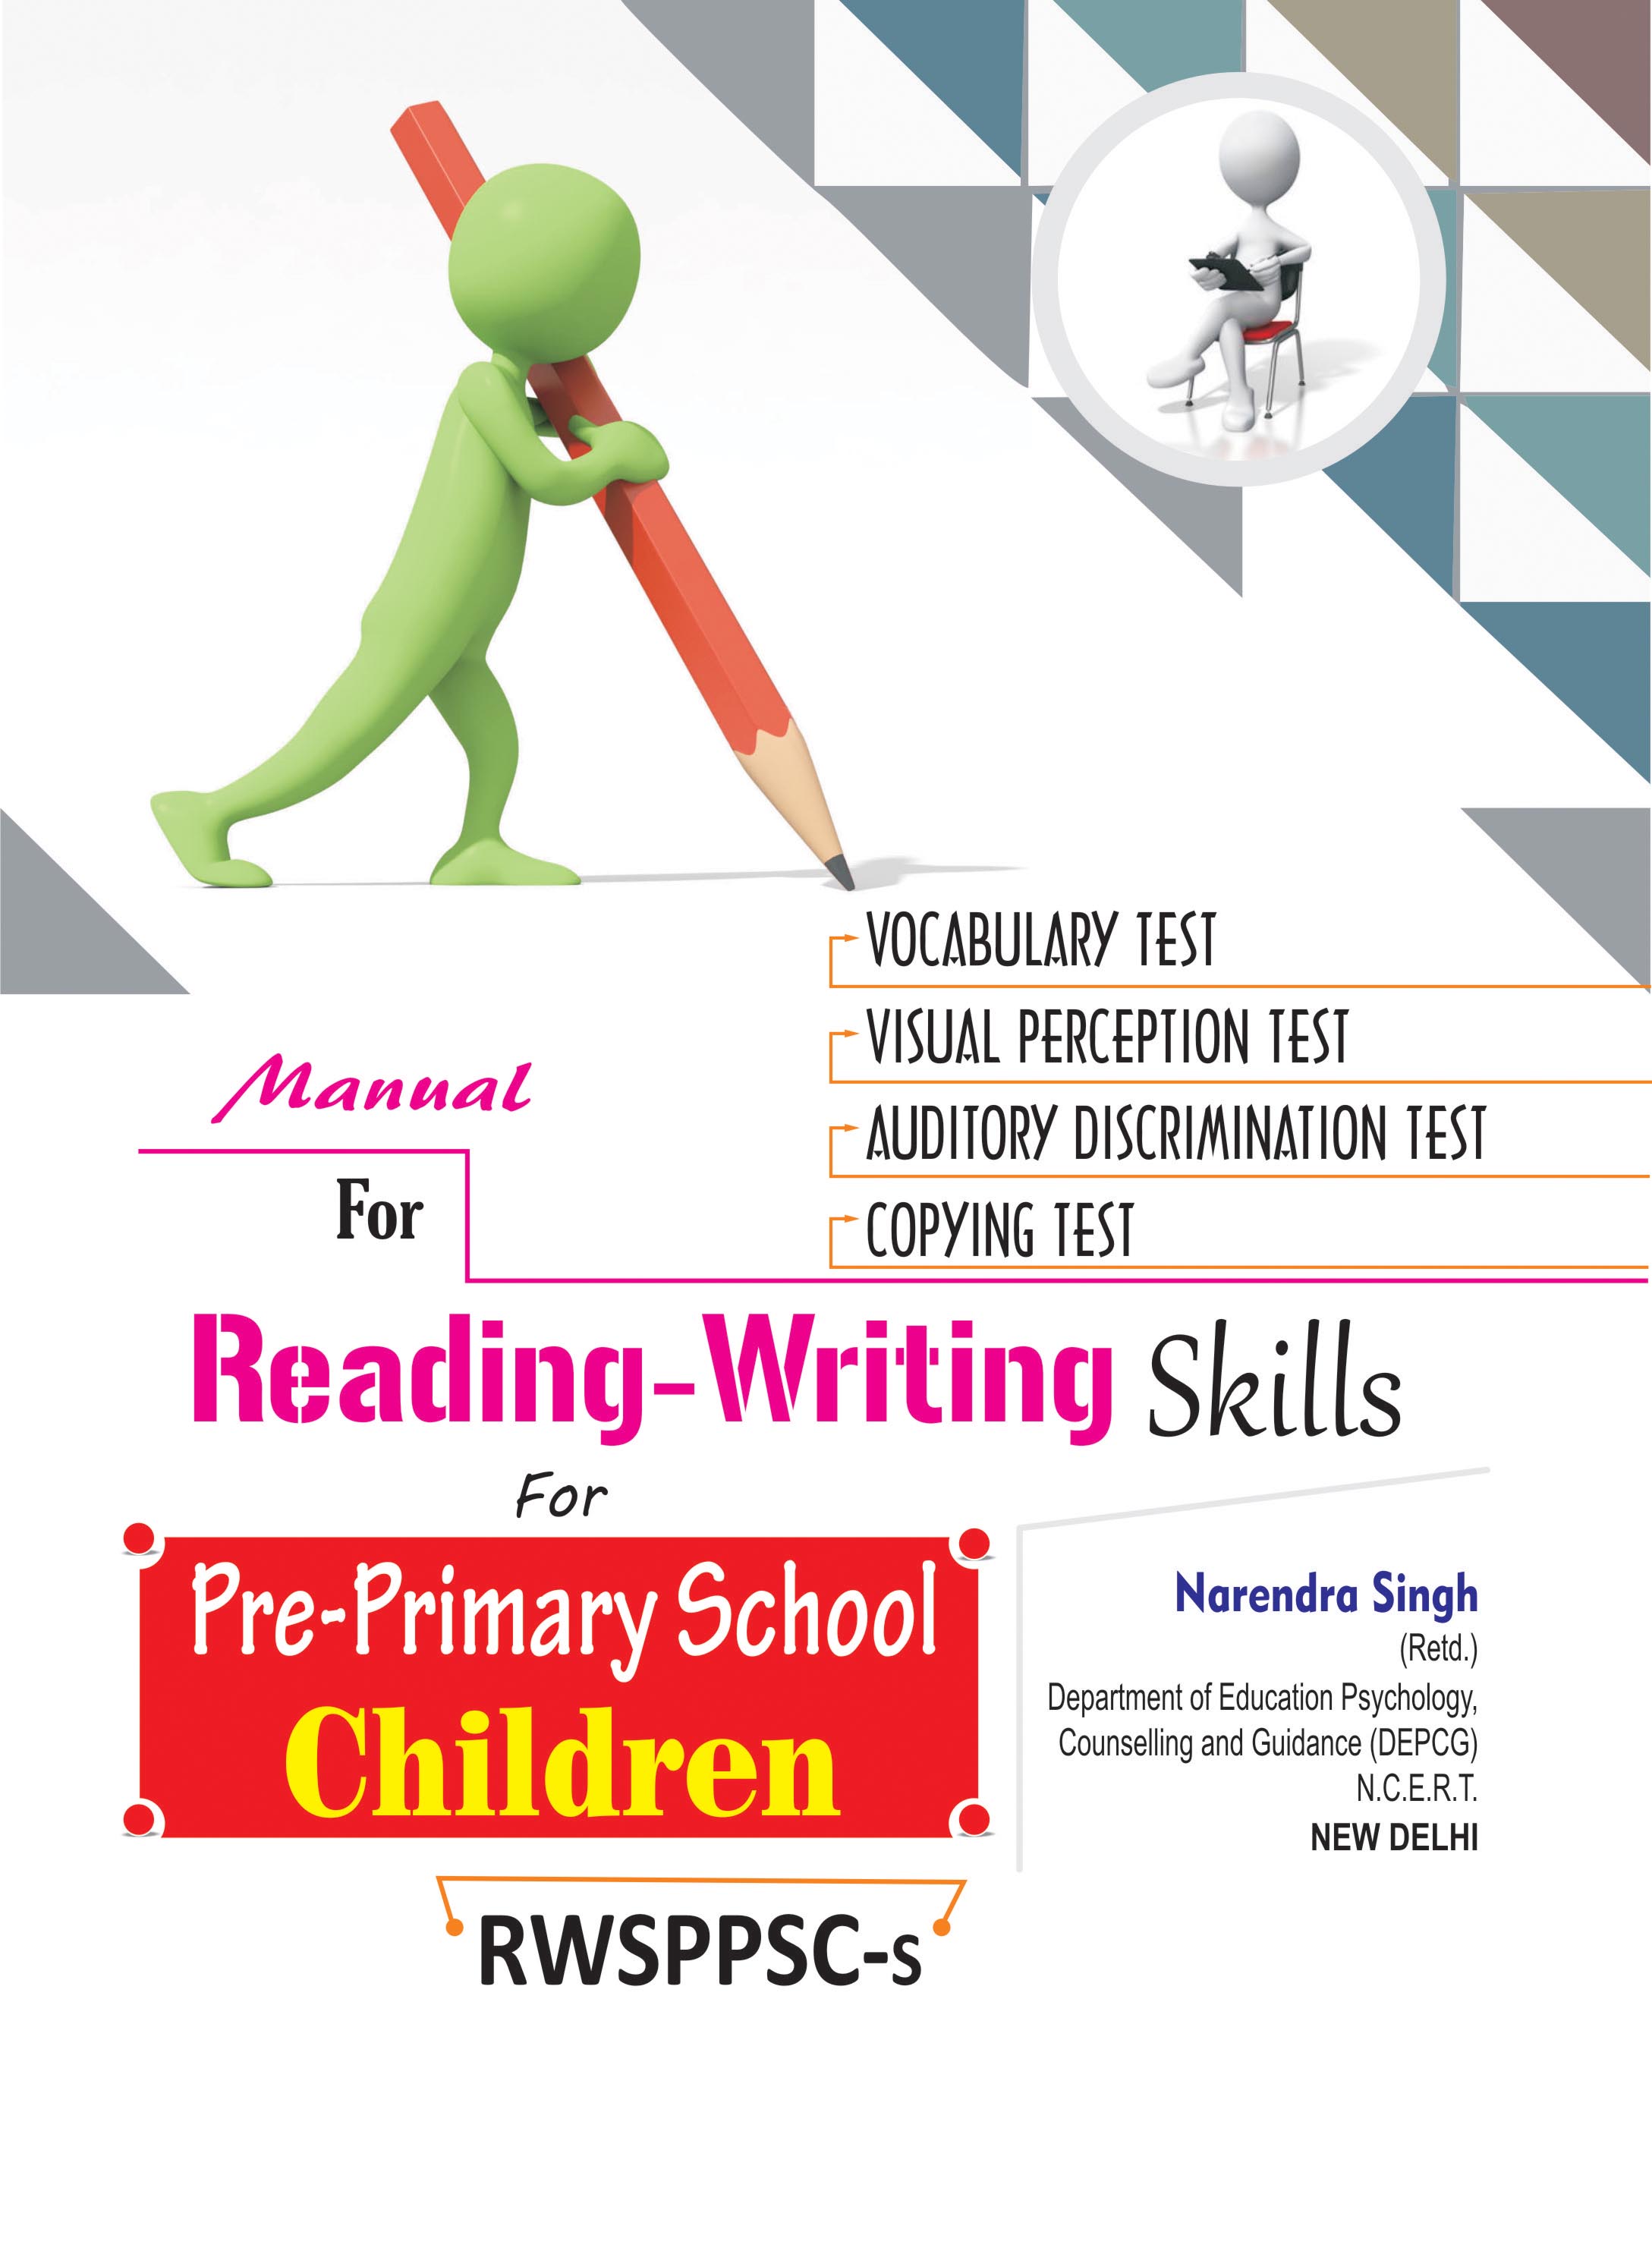 READING-WRITING-SKILLS-FOR-PRE-PRIMARY-SCHOOL-CHILDREN